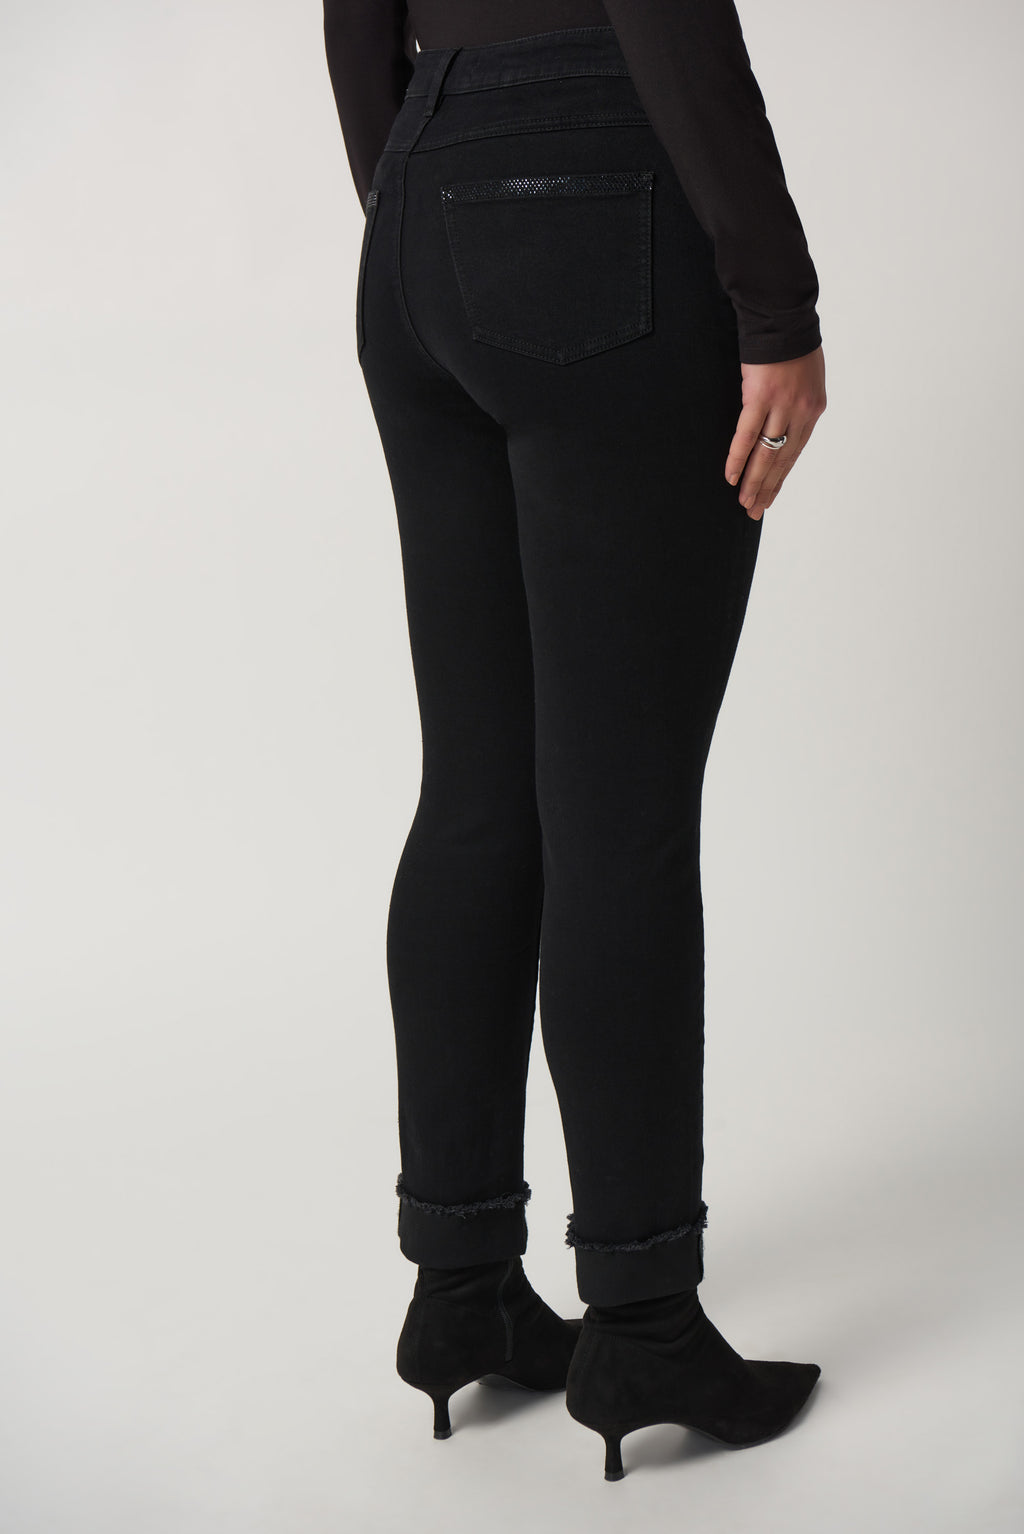 Joseph Ribkoff Black Classic Slim-Fit Jeans Style 233929